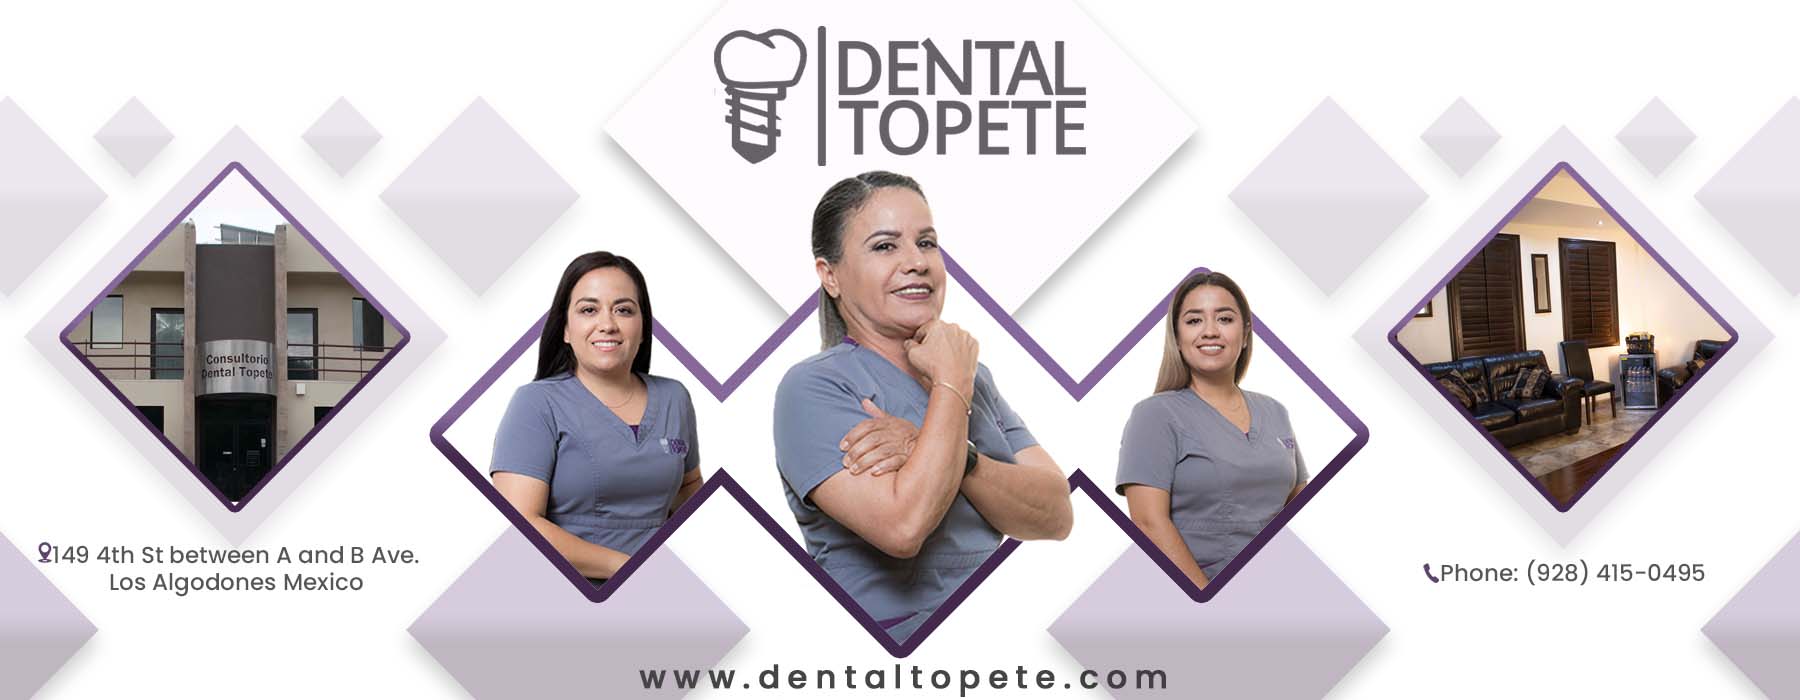 Dental Topete